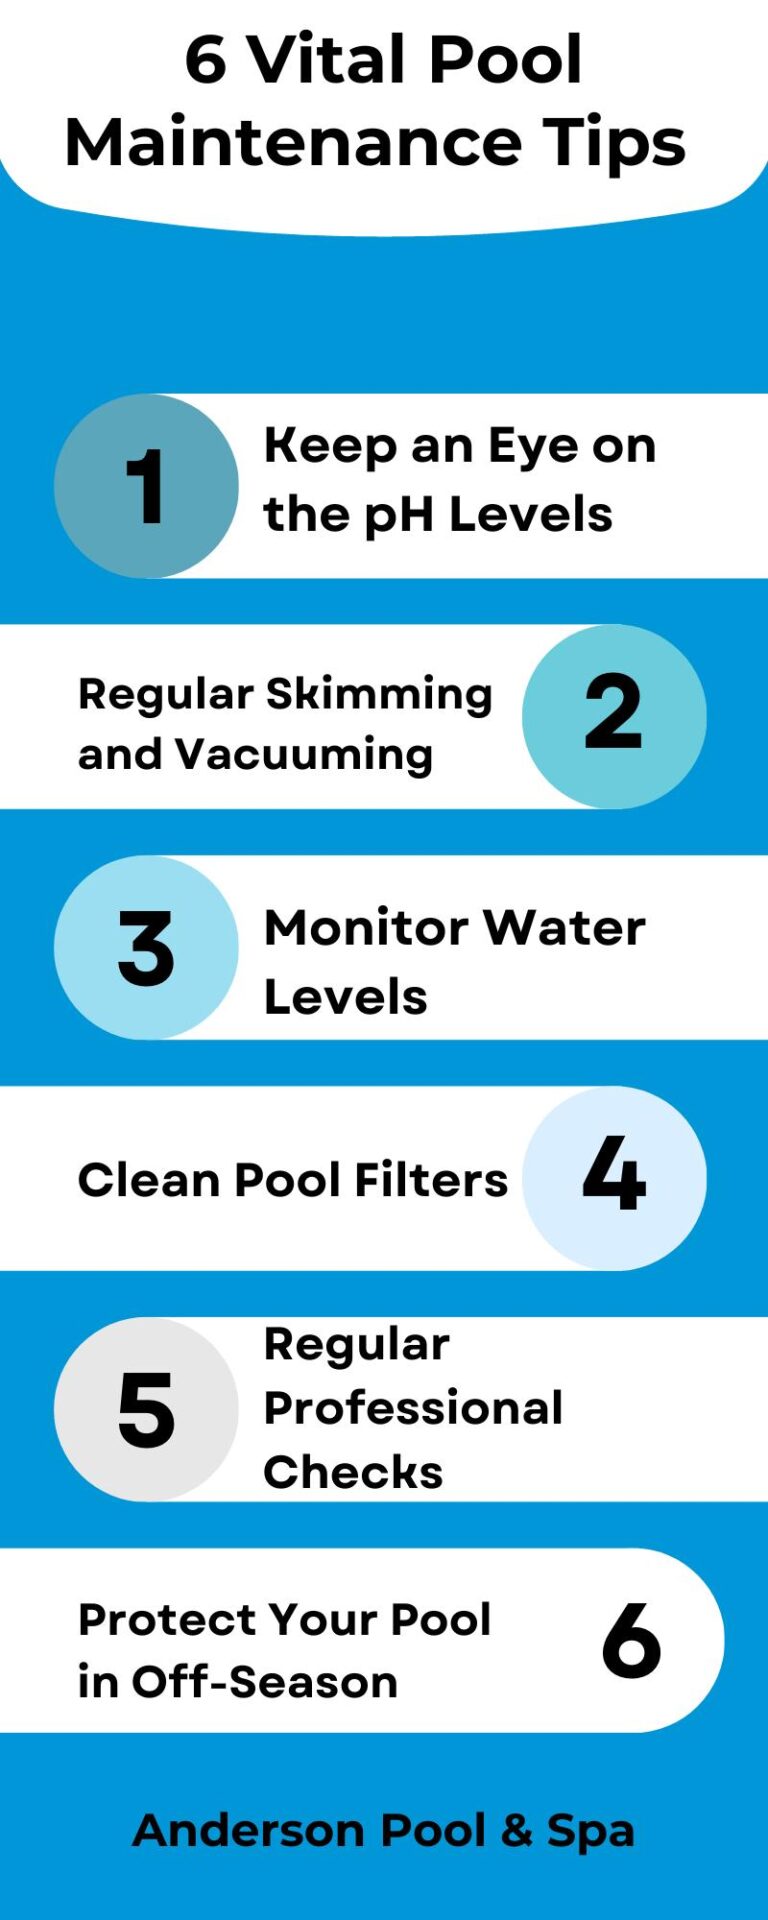 Pool Maintenance: Infographic